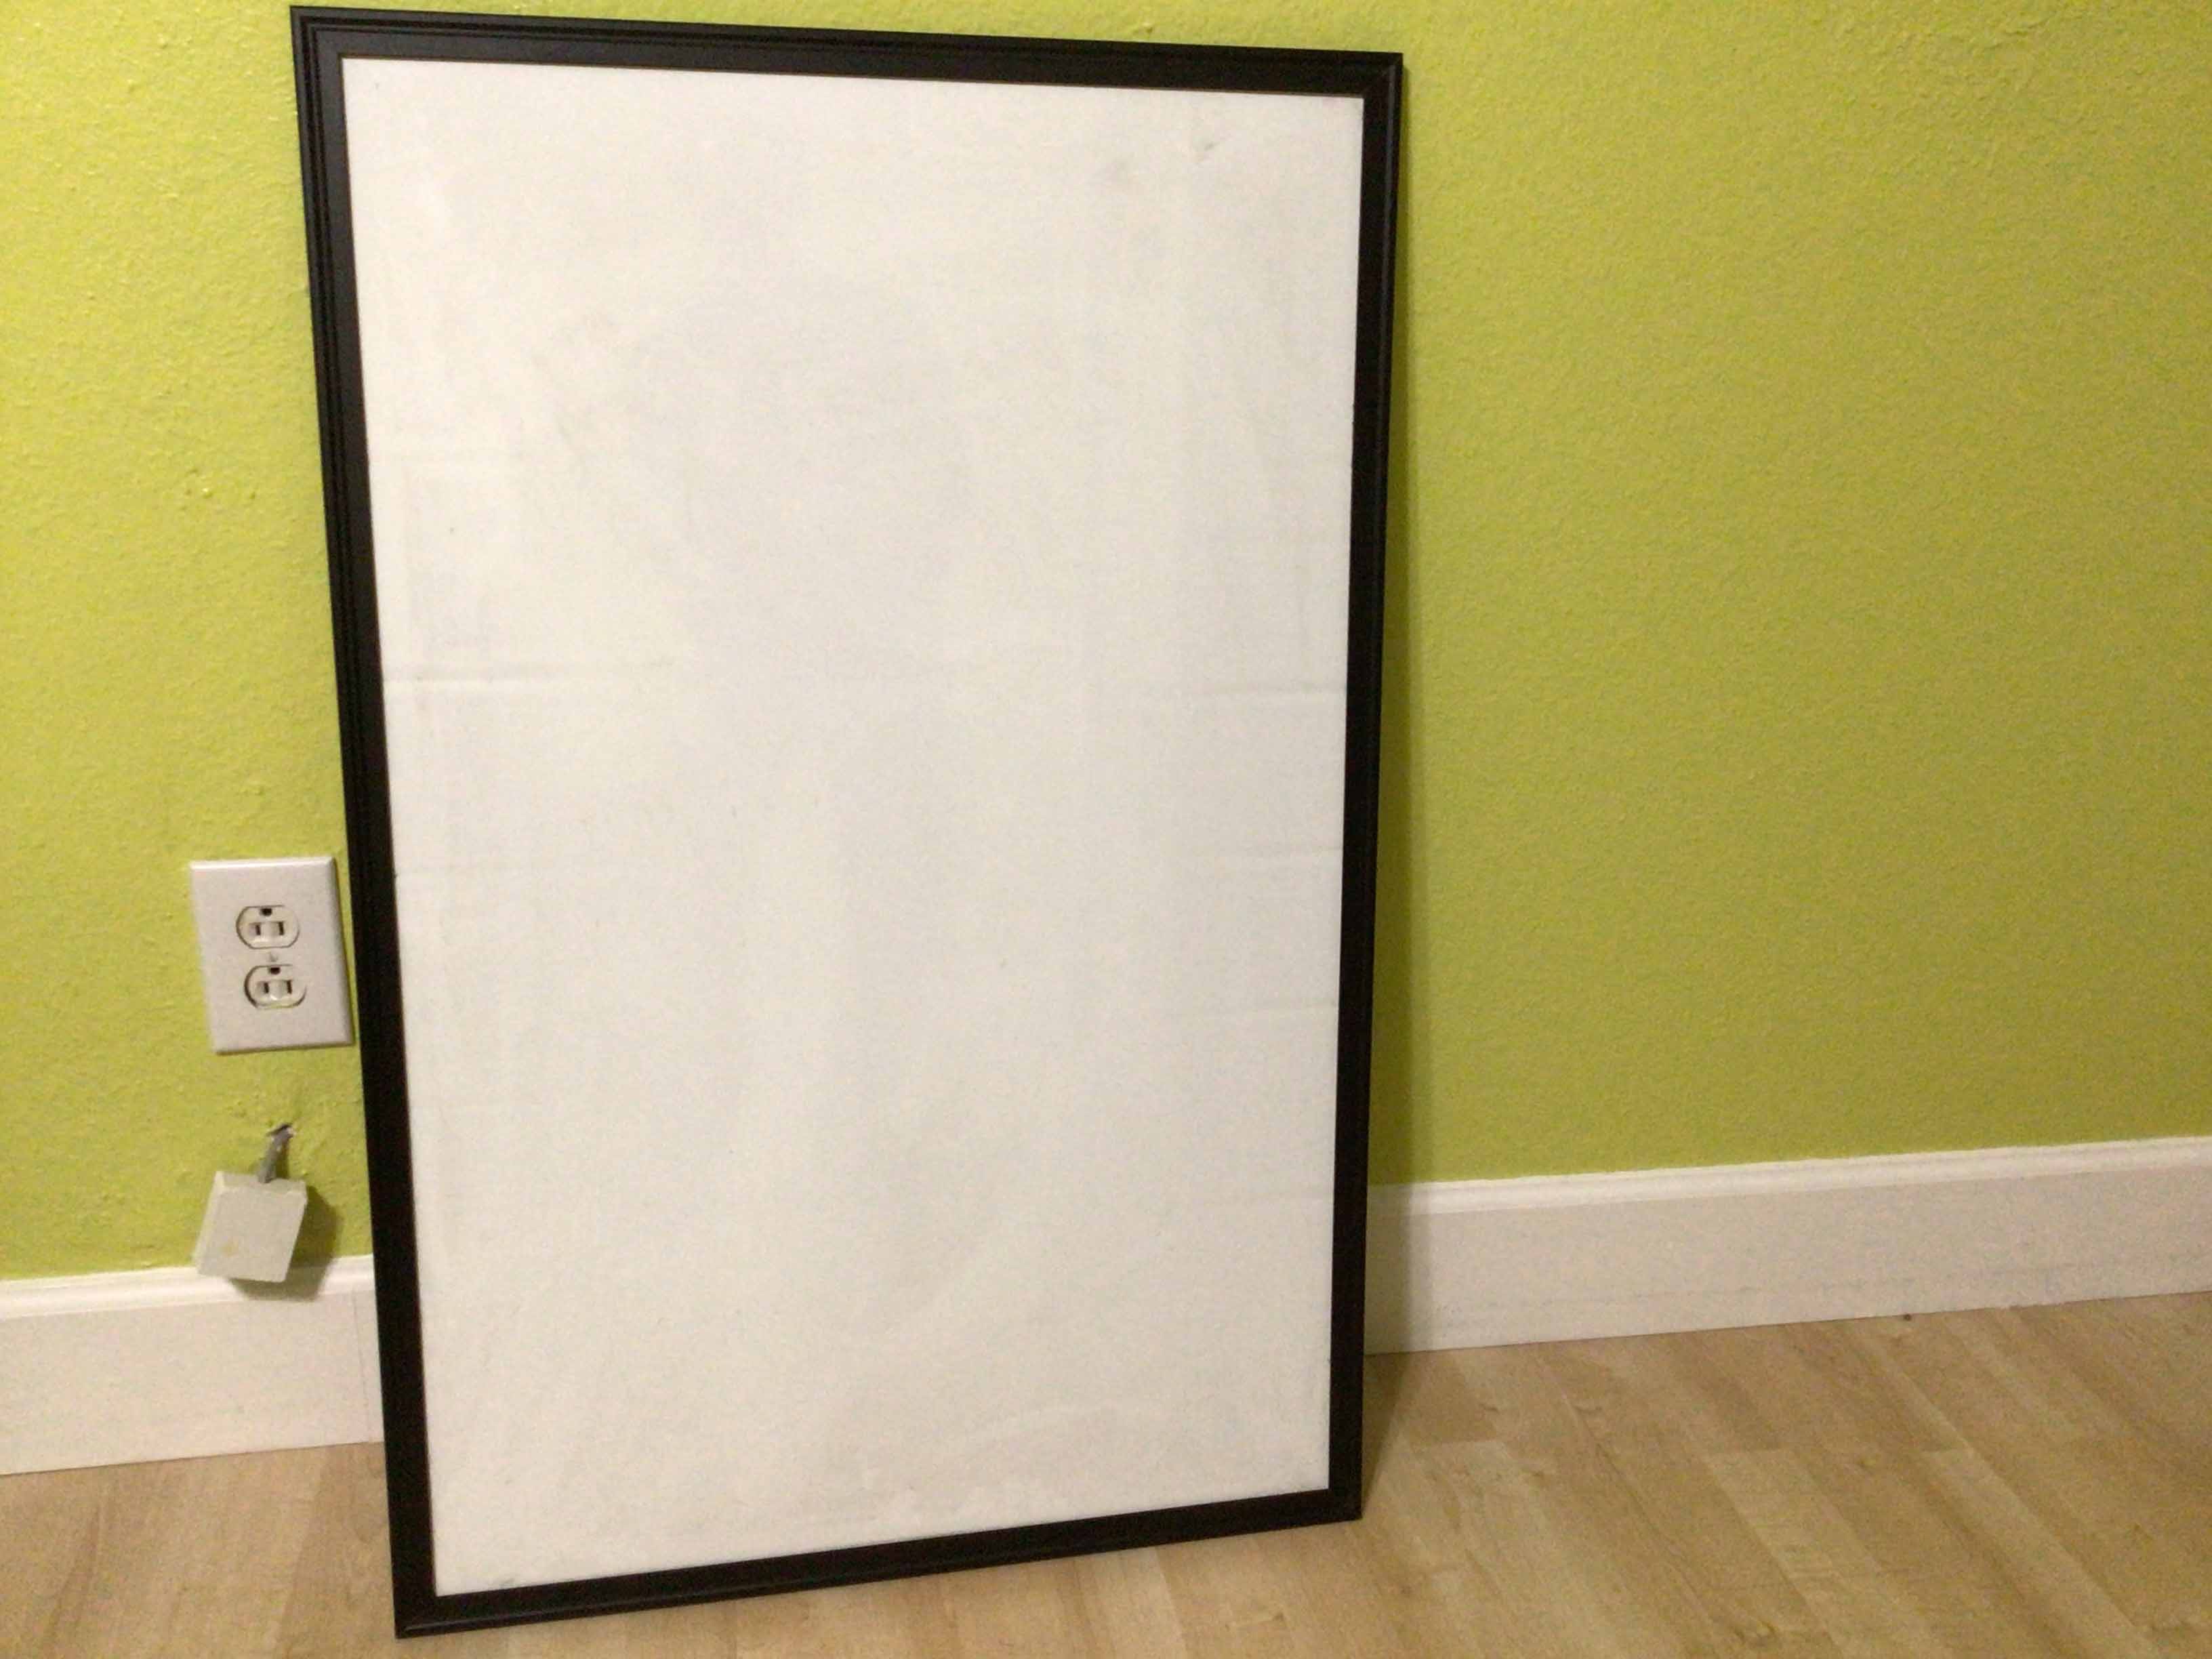 portable whiteboard (23 X 35)